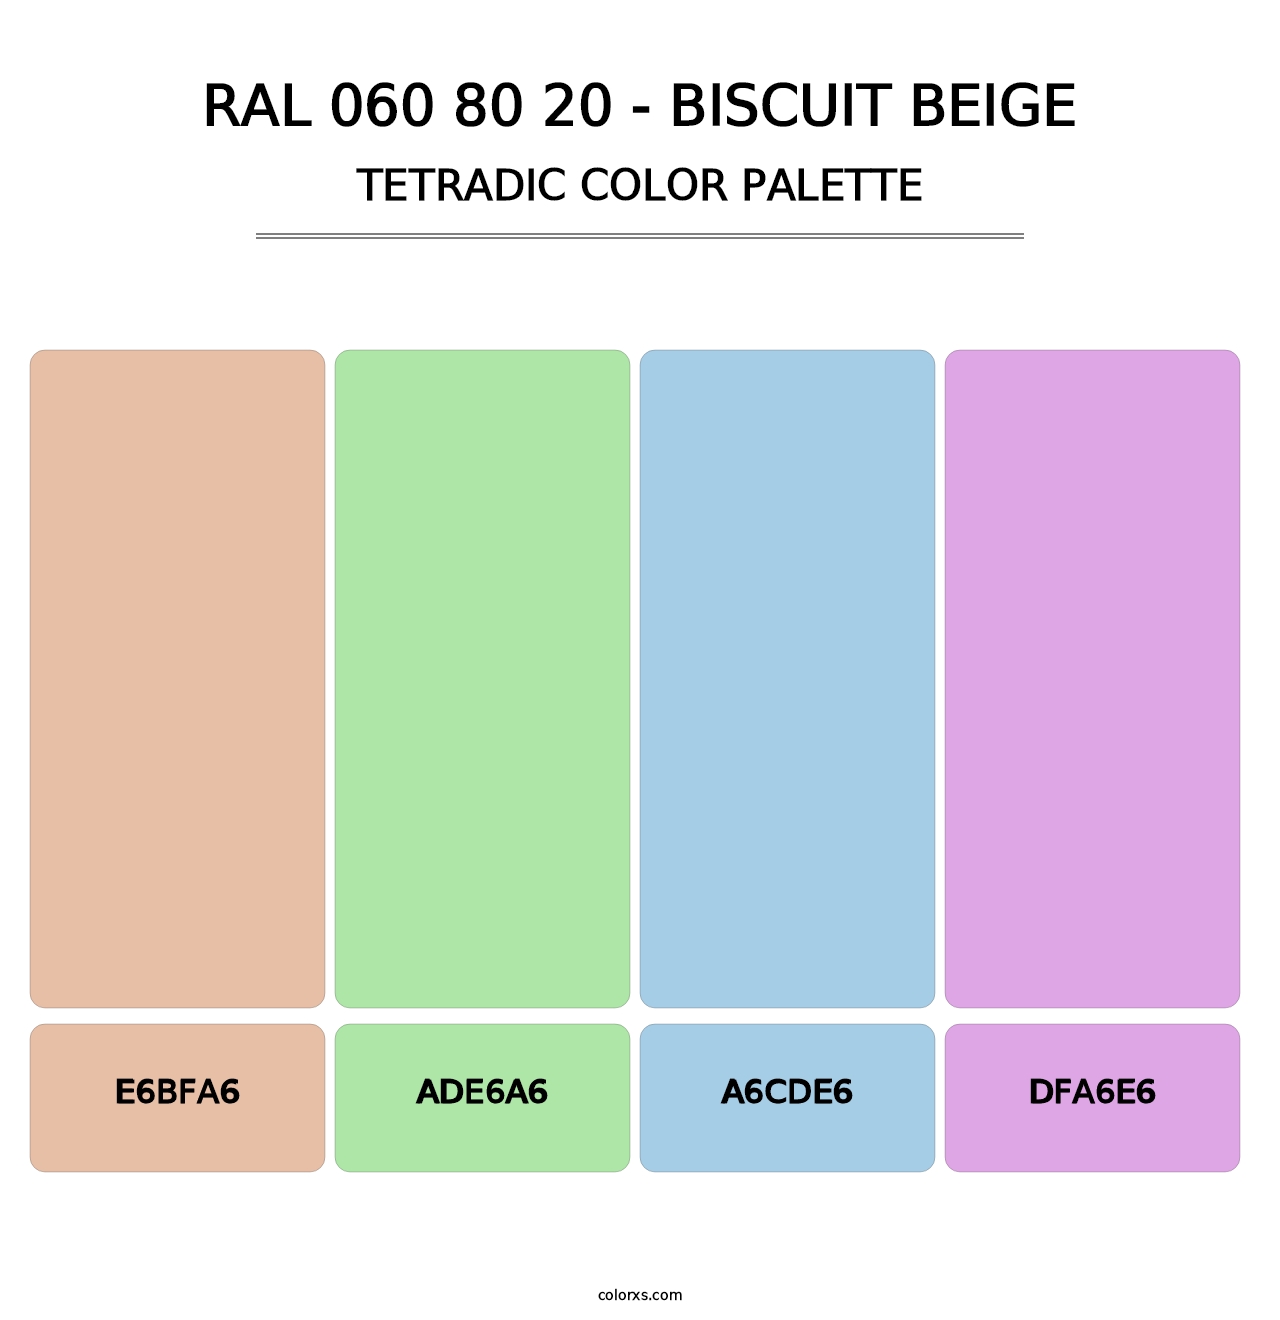 RAL 060 80 20 - Biscuit Beige - Tetradic Color Palette